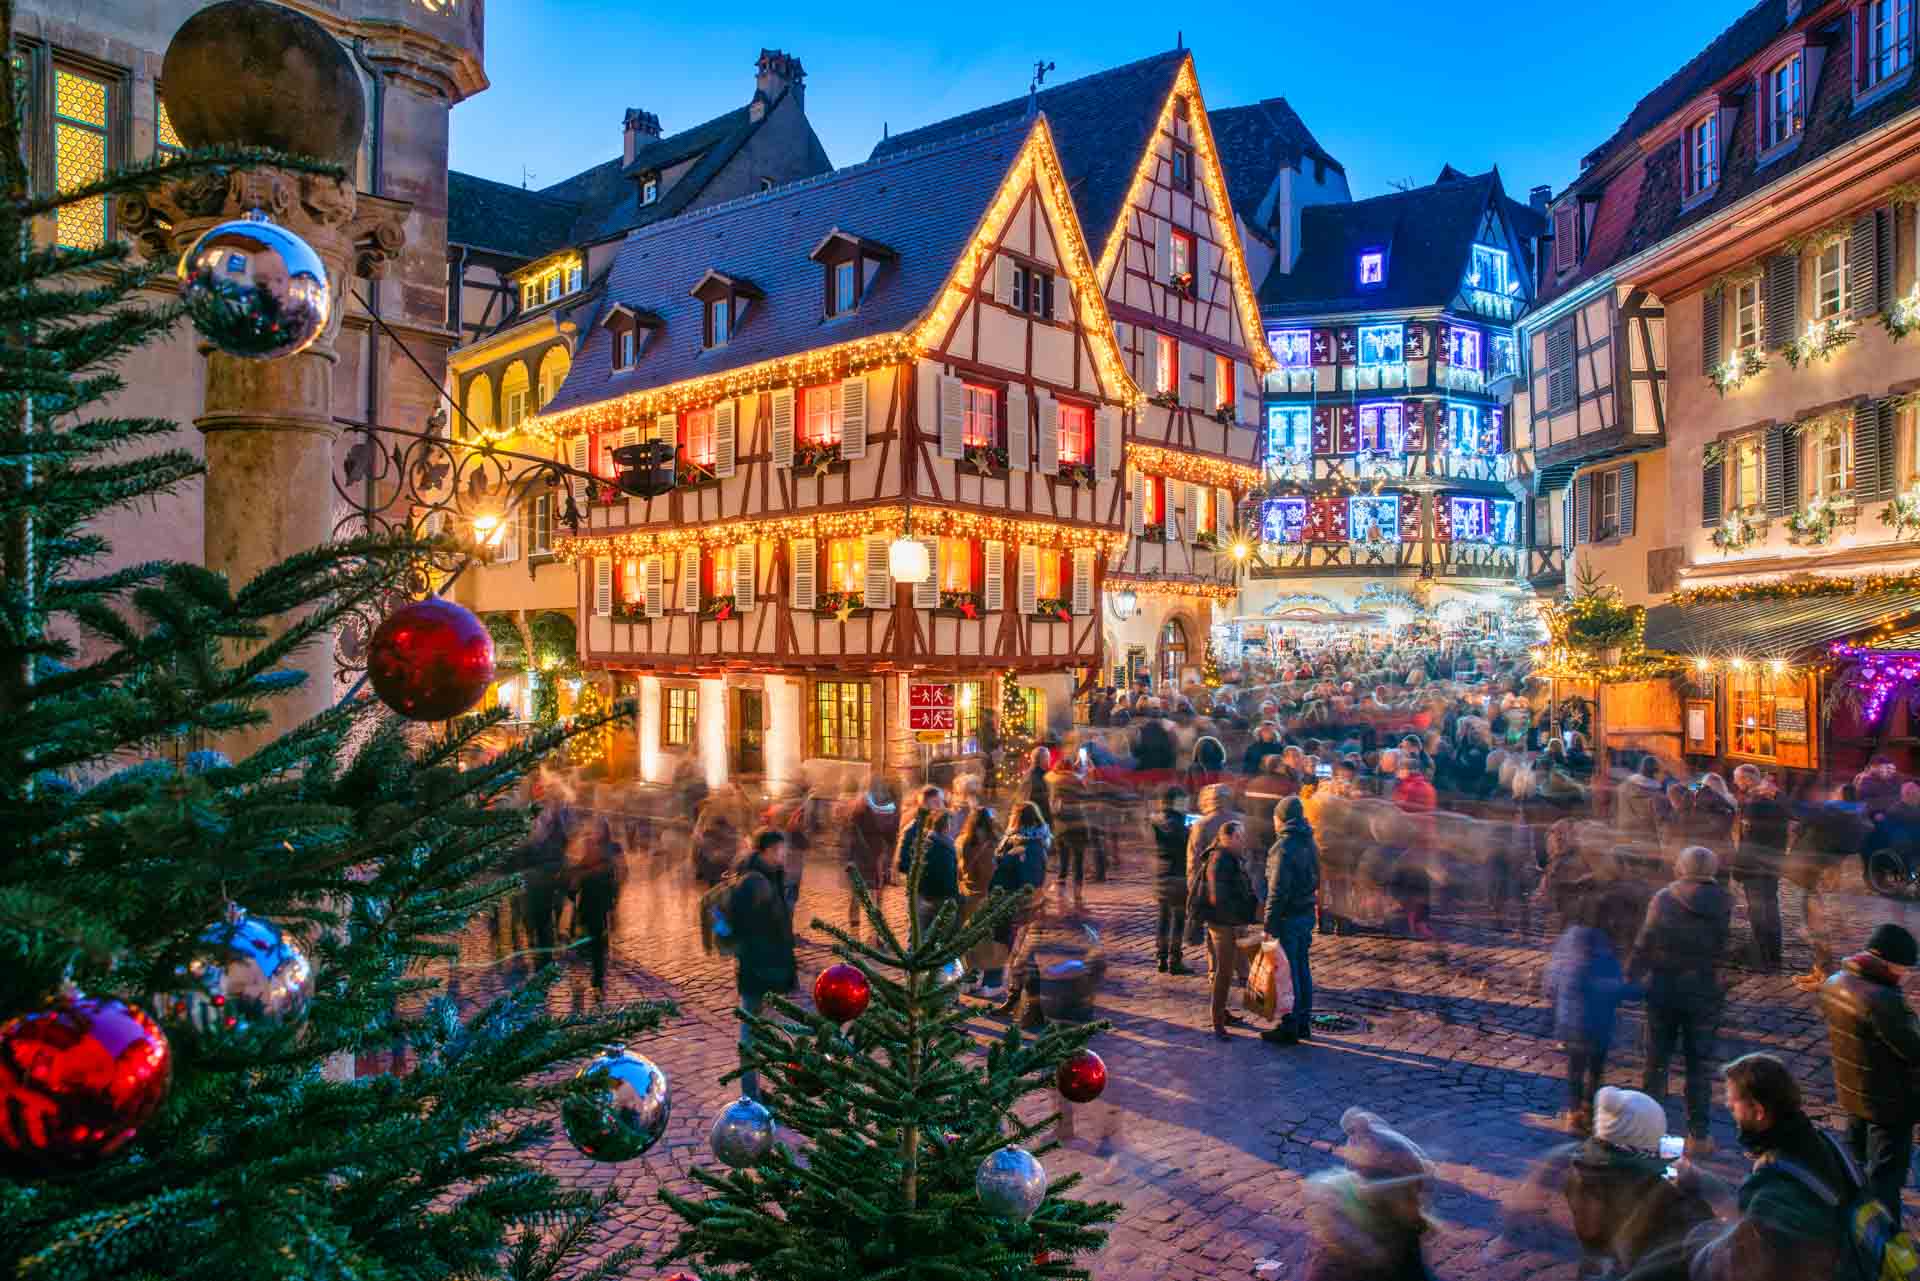 Marché de Noël de Colmar © AdobeStock - Pixelshop